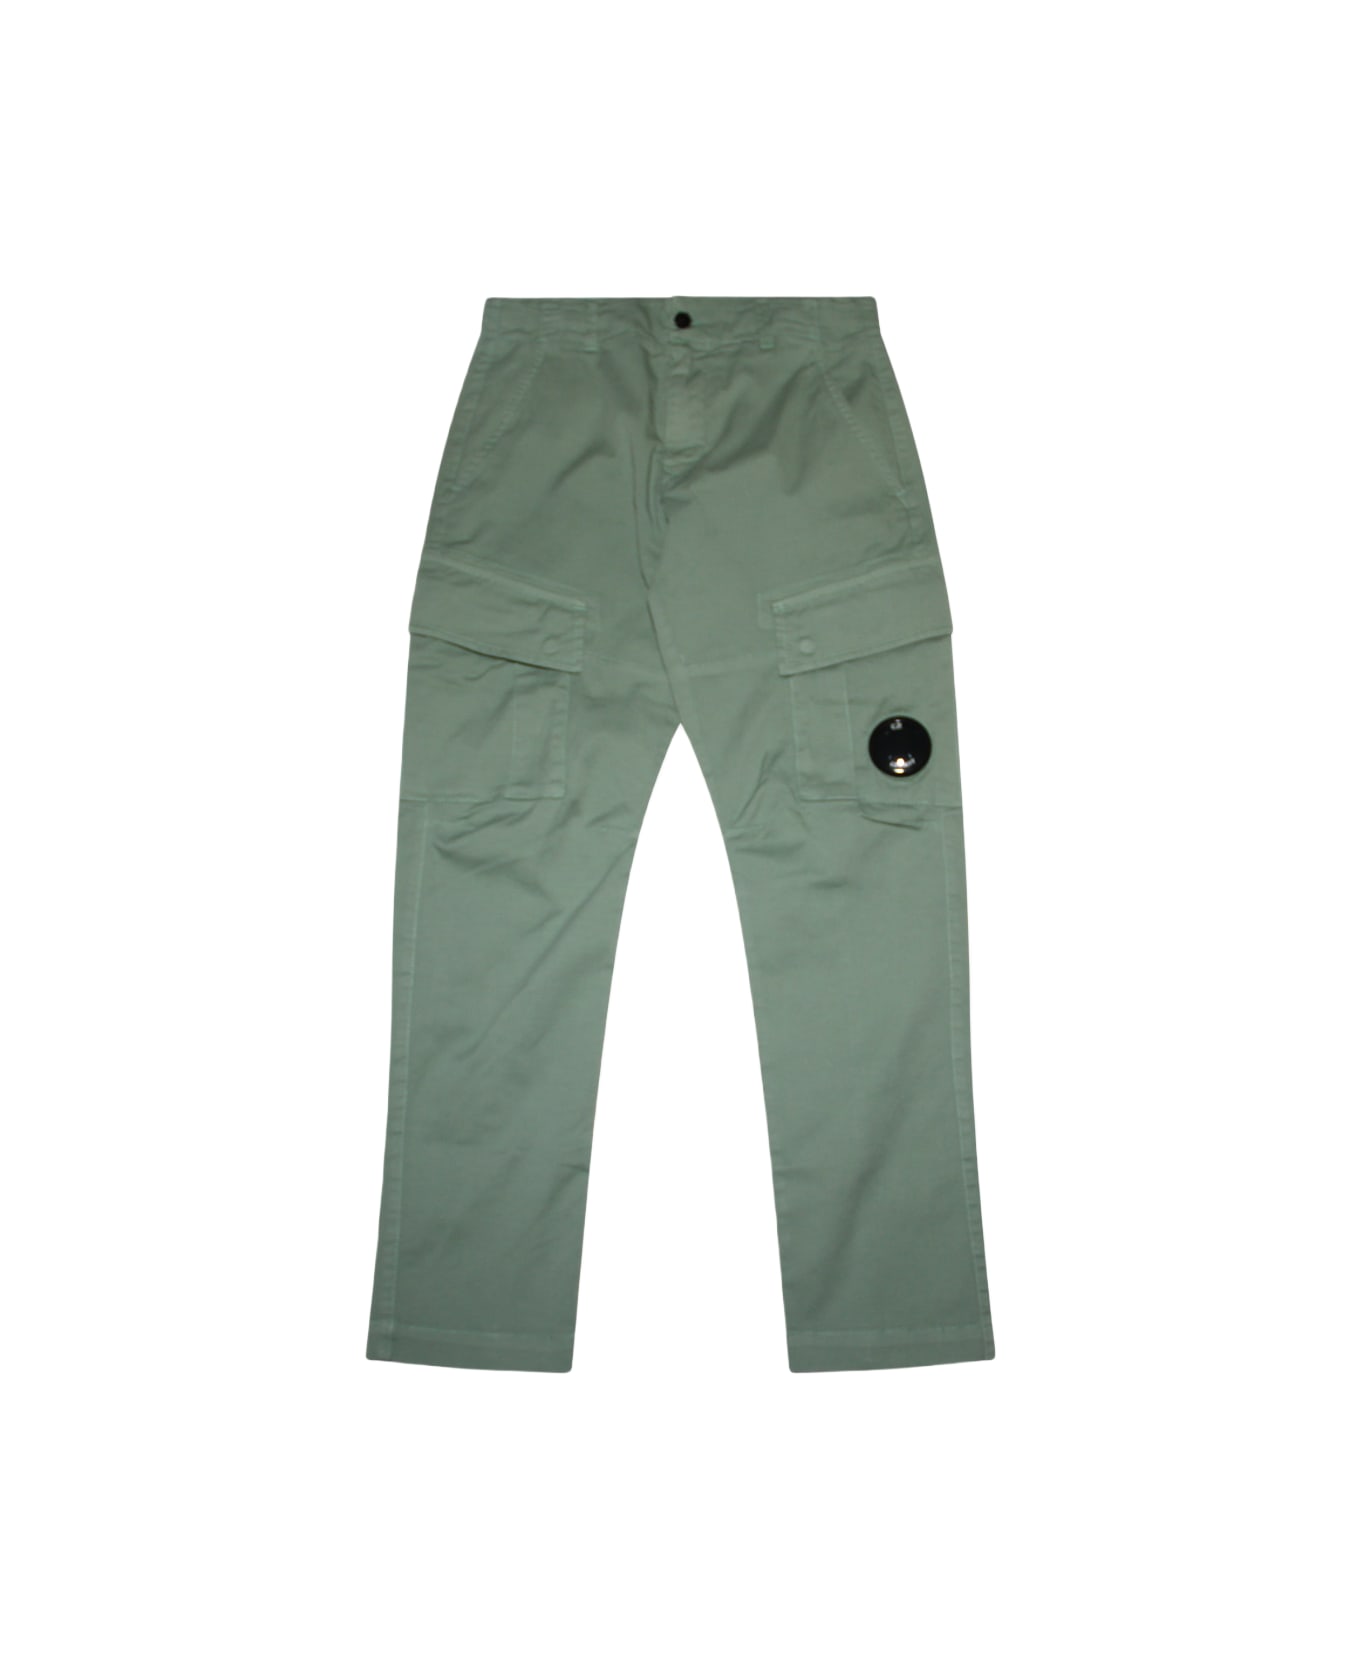 C.P. Company Green Cotton Pants - Verde ボトムス